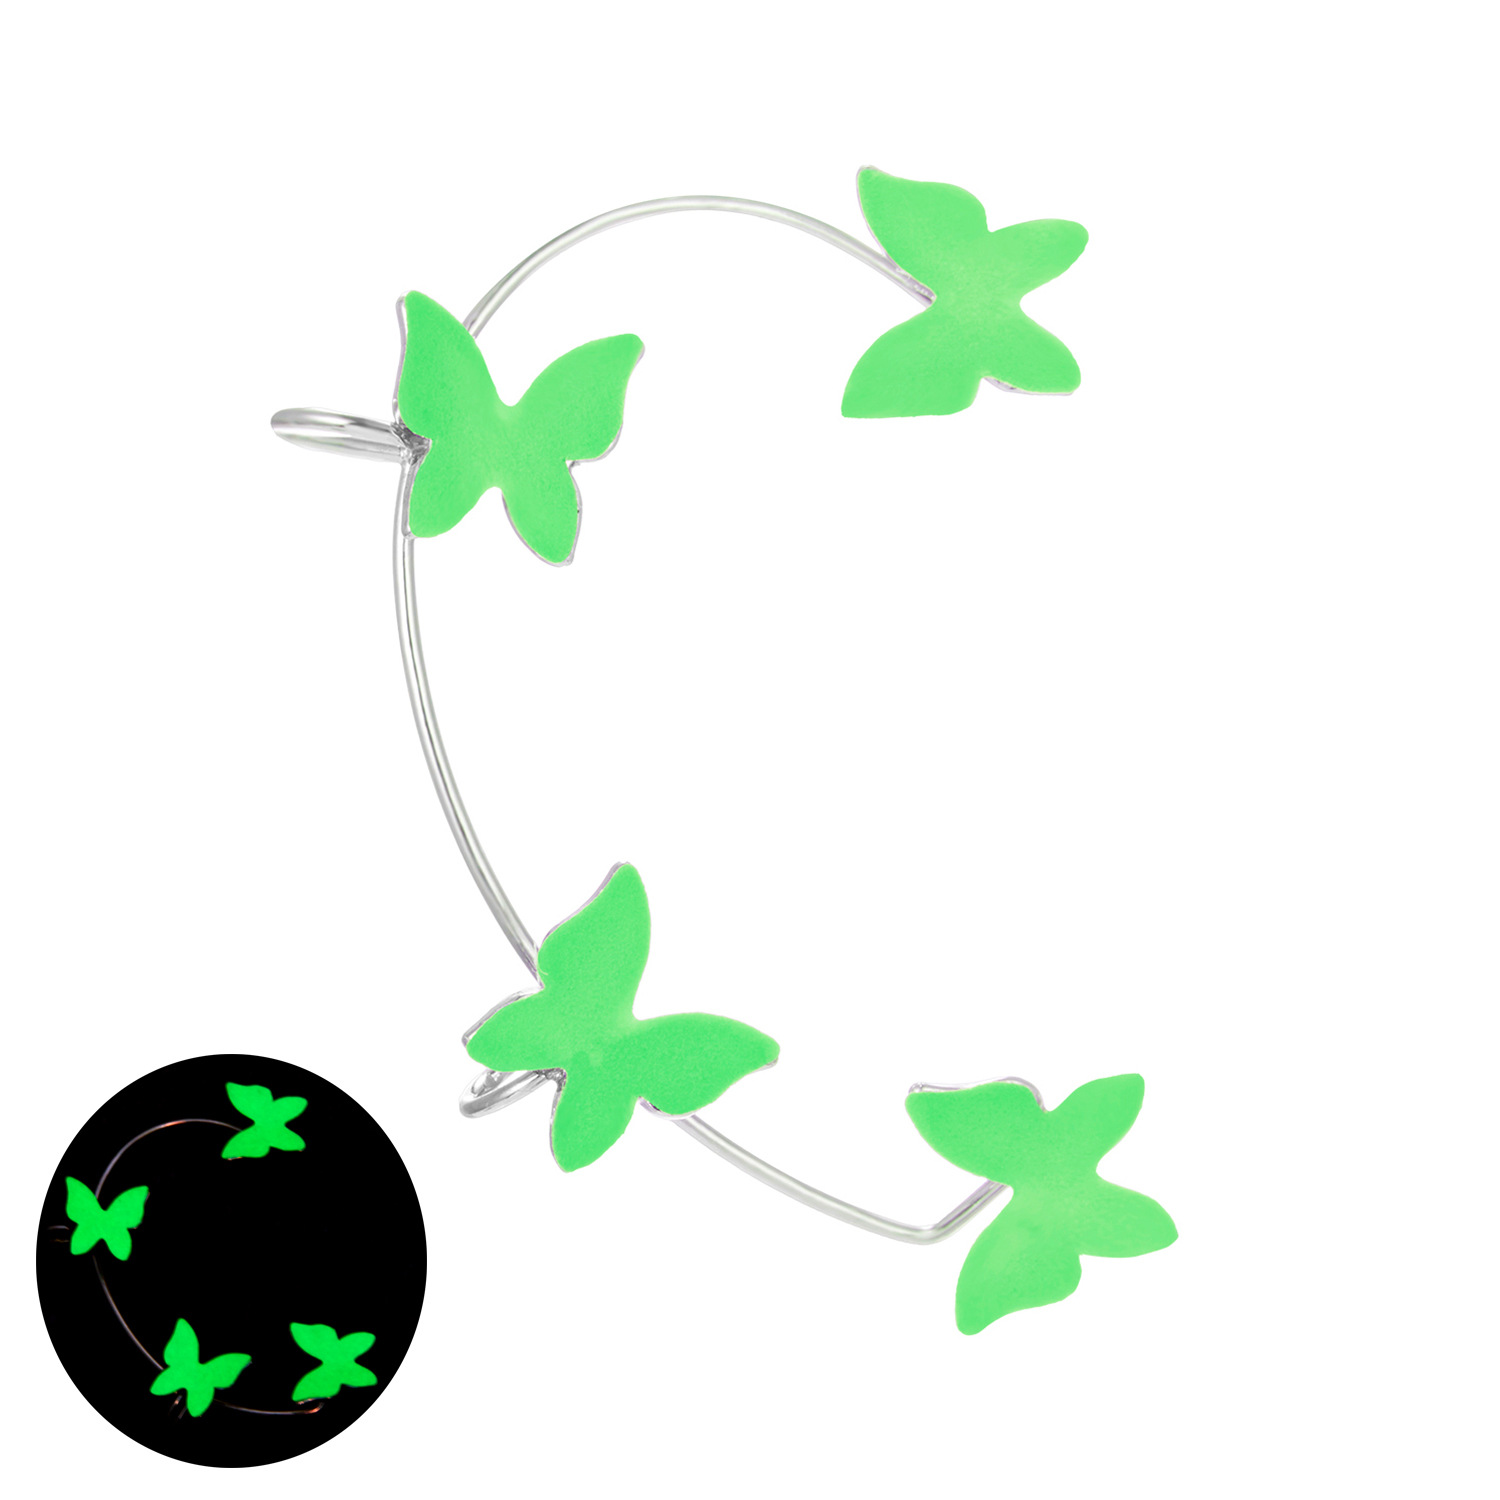 4:green right